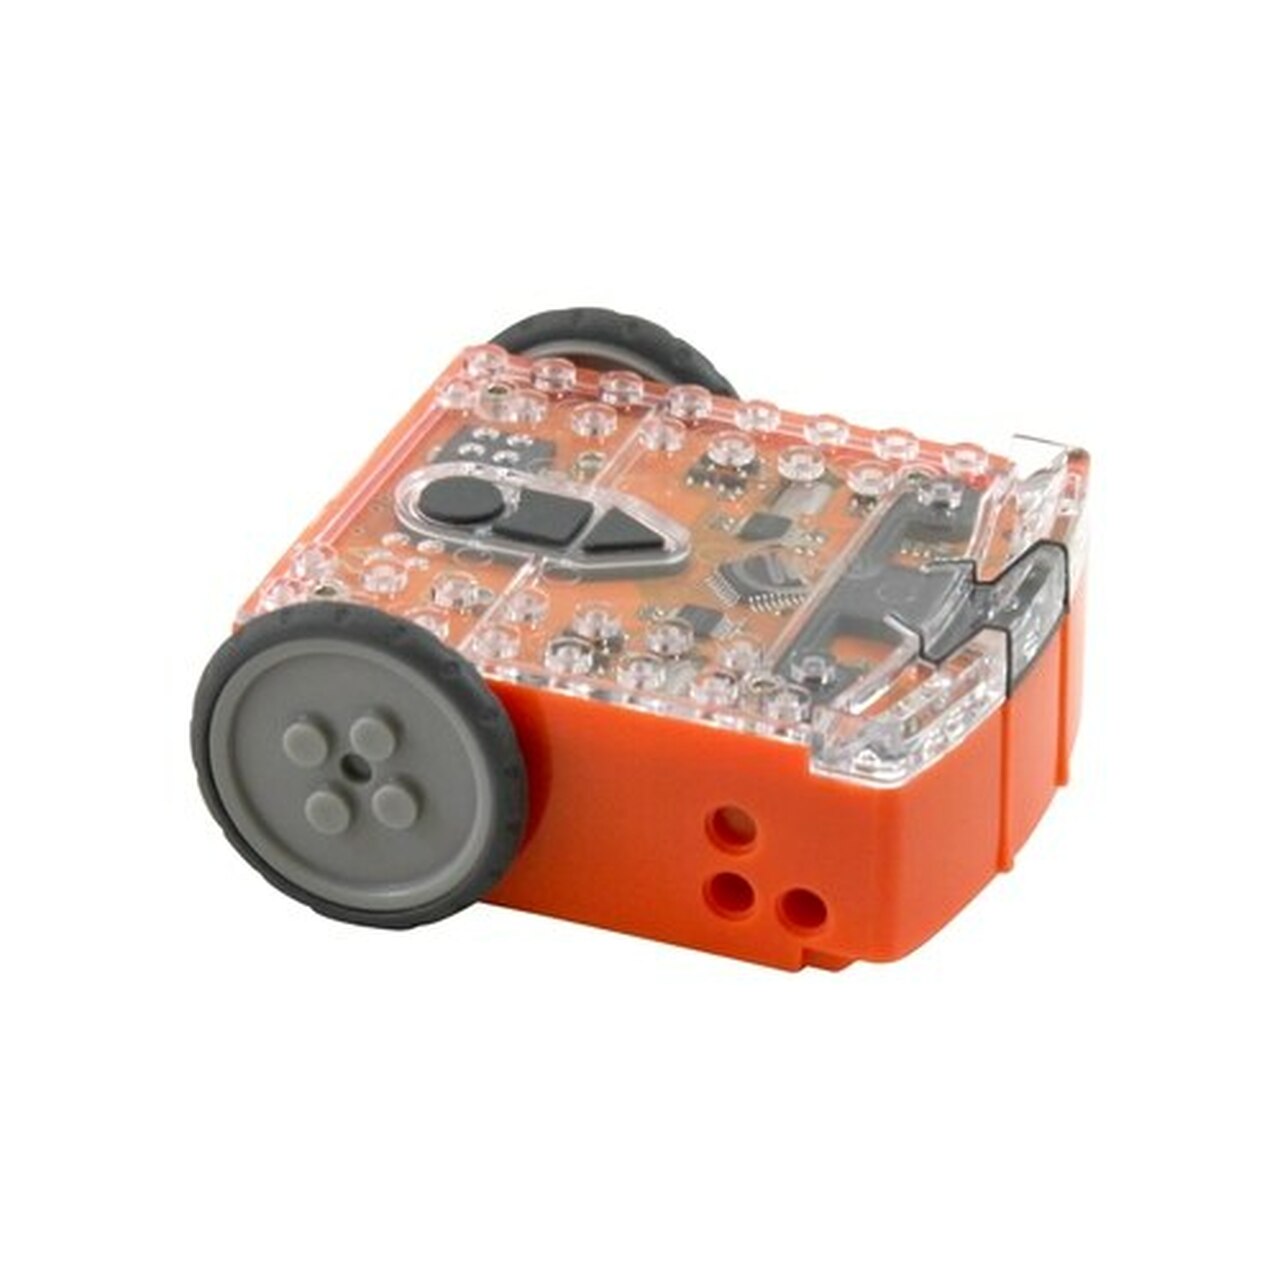 Edison Educational Robot Kit – Set of 2 for STEAM Education – Robotics and Coding - ARVRedtech.com | AR & VR Education Technology